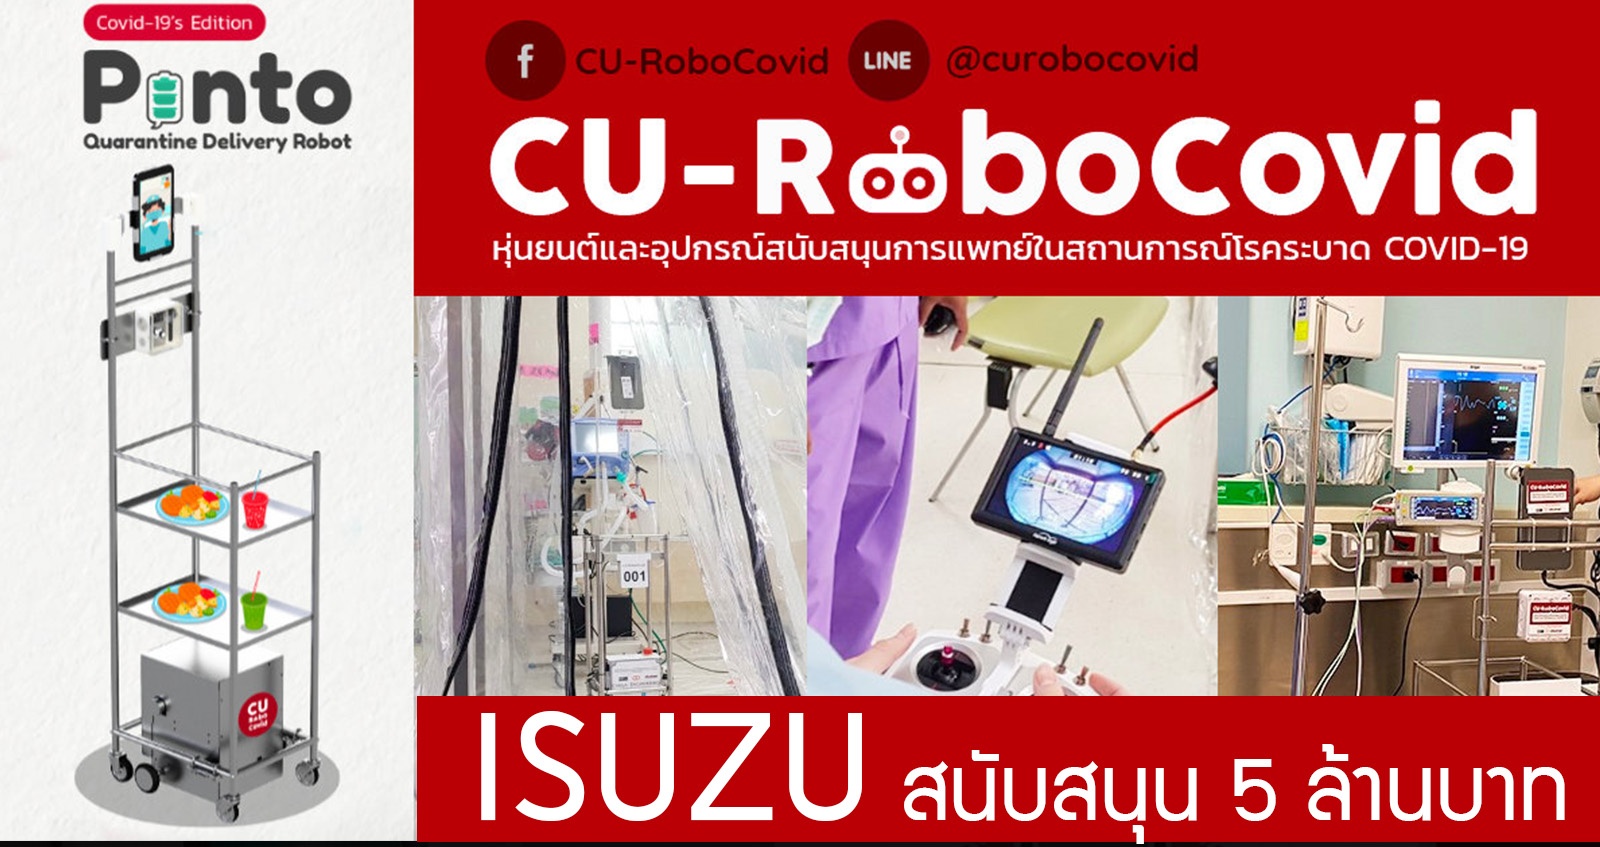 ISUZU ประเทศไทย มอบ 5 ล้านบาท สนับสนุนพัฒนาหุ้นยนต์ทางการแพทย์ สู้ COVID-19 เพื่อมอบให้ โรงพยาบาลทั่วประเทศ